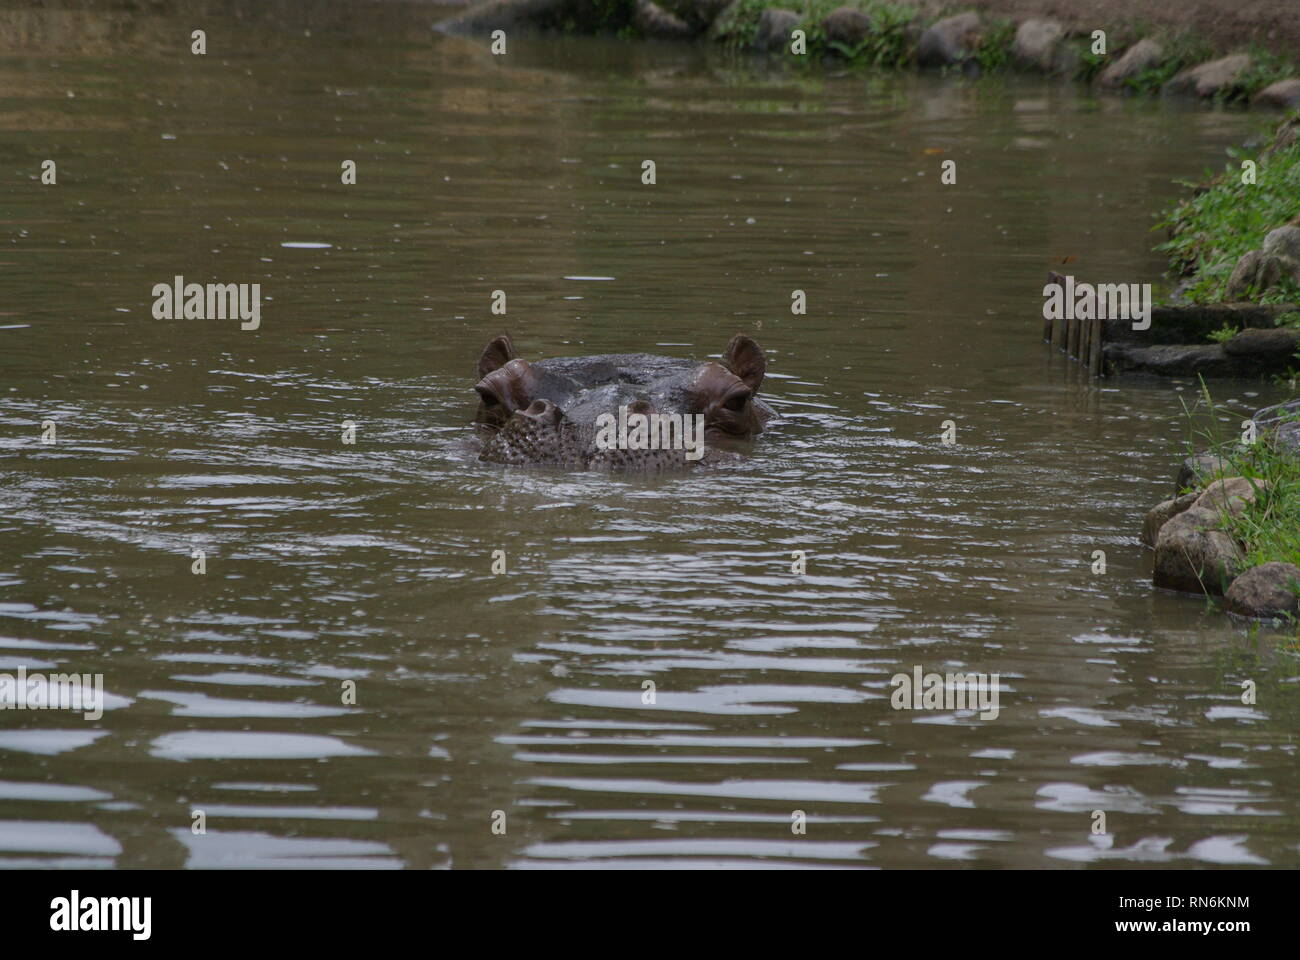 Hippopotamus swimming in the pond Stock Photo